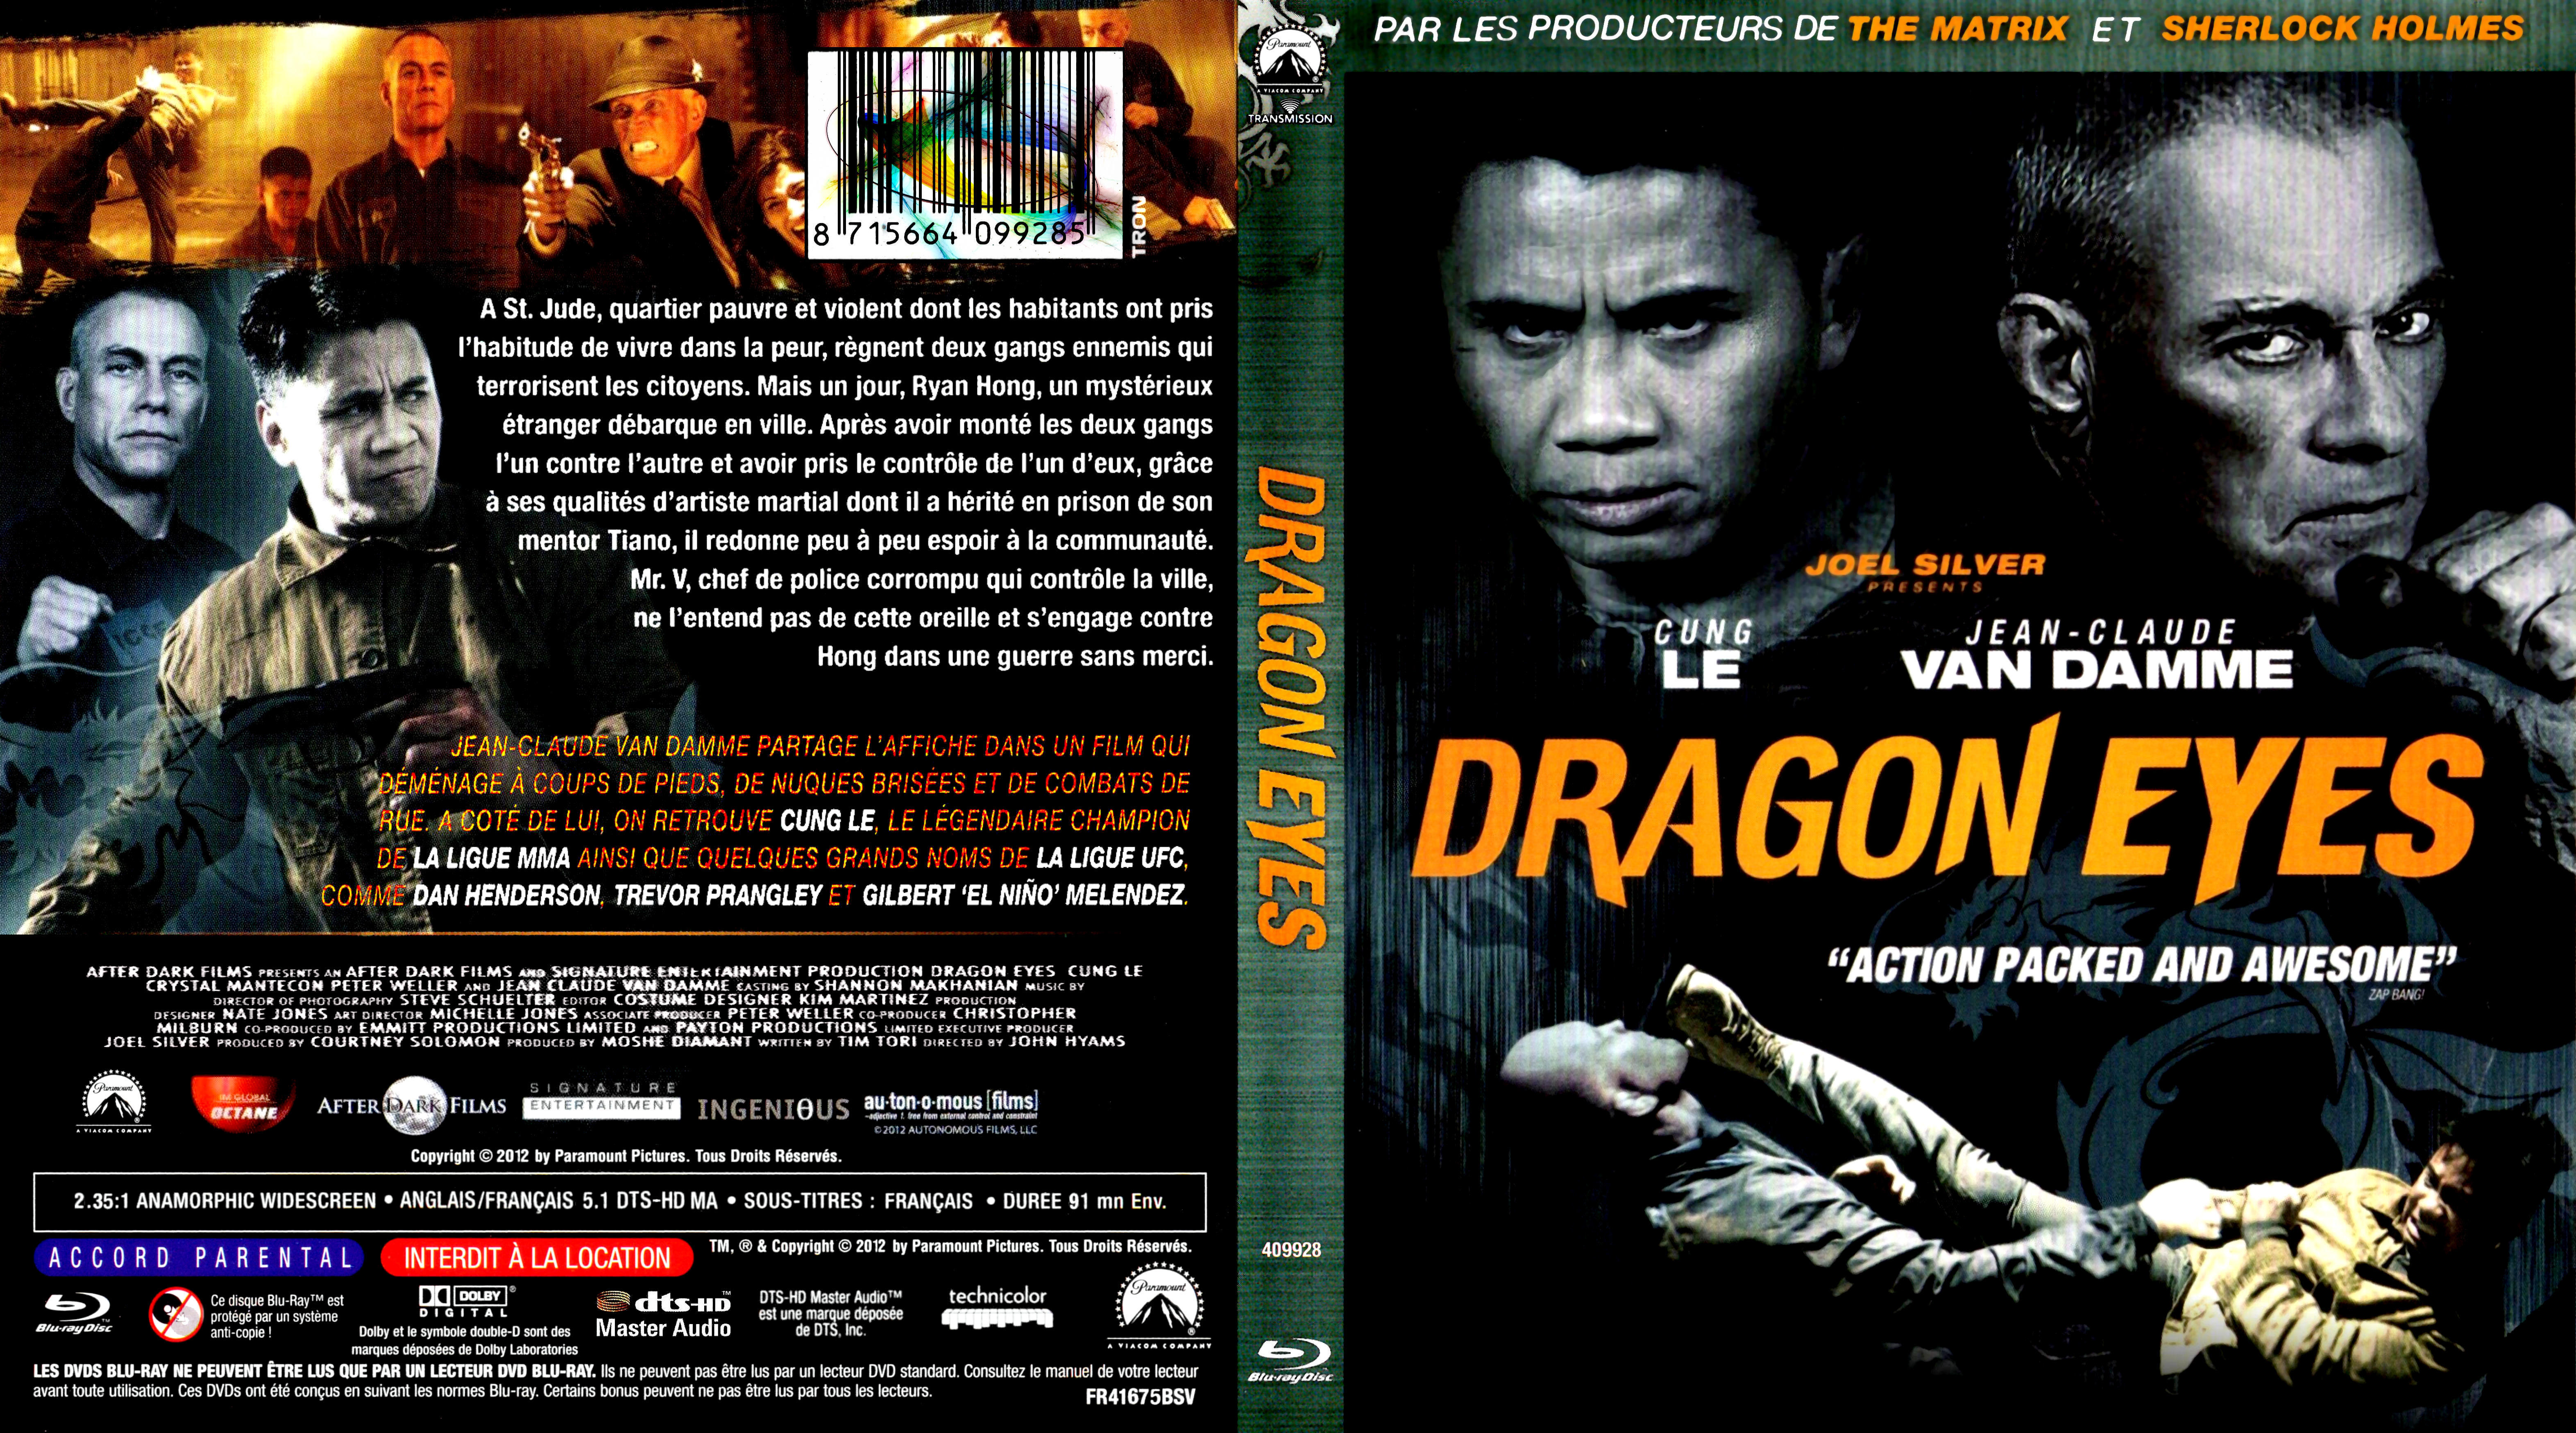 Jaquette DVD Dragon Eyes custom (BLU-RAY)